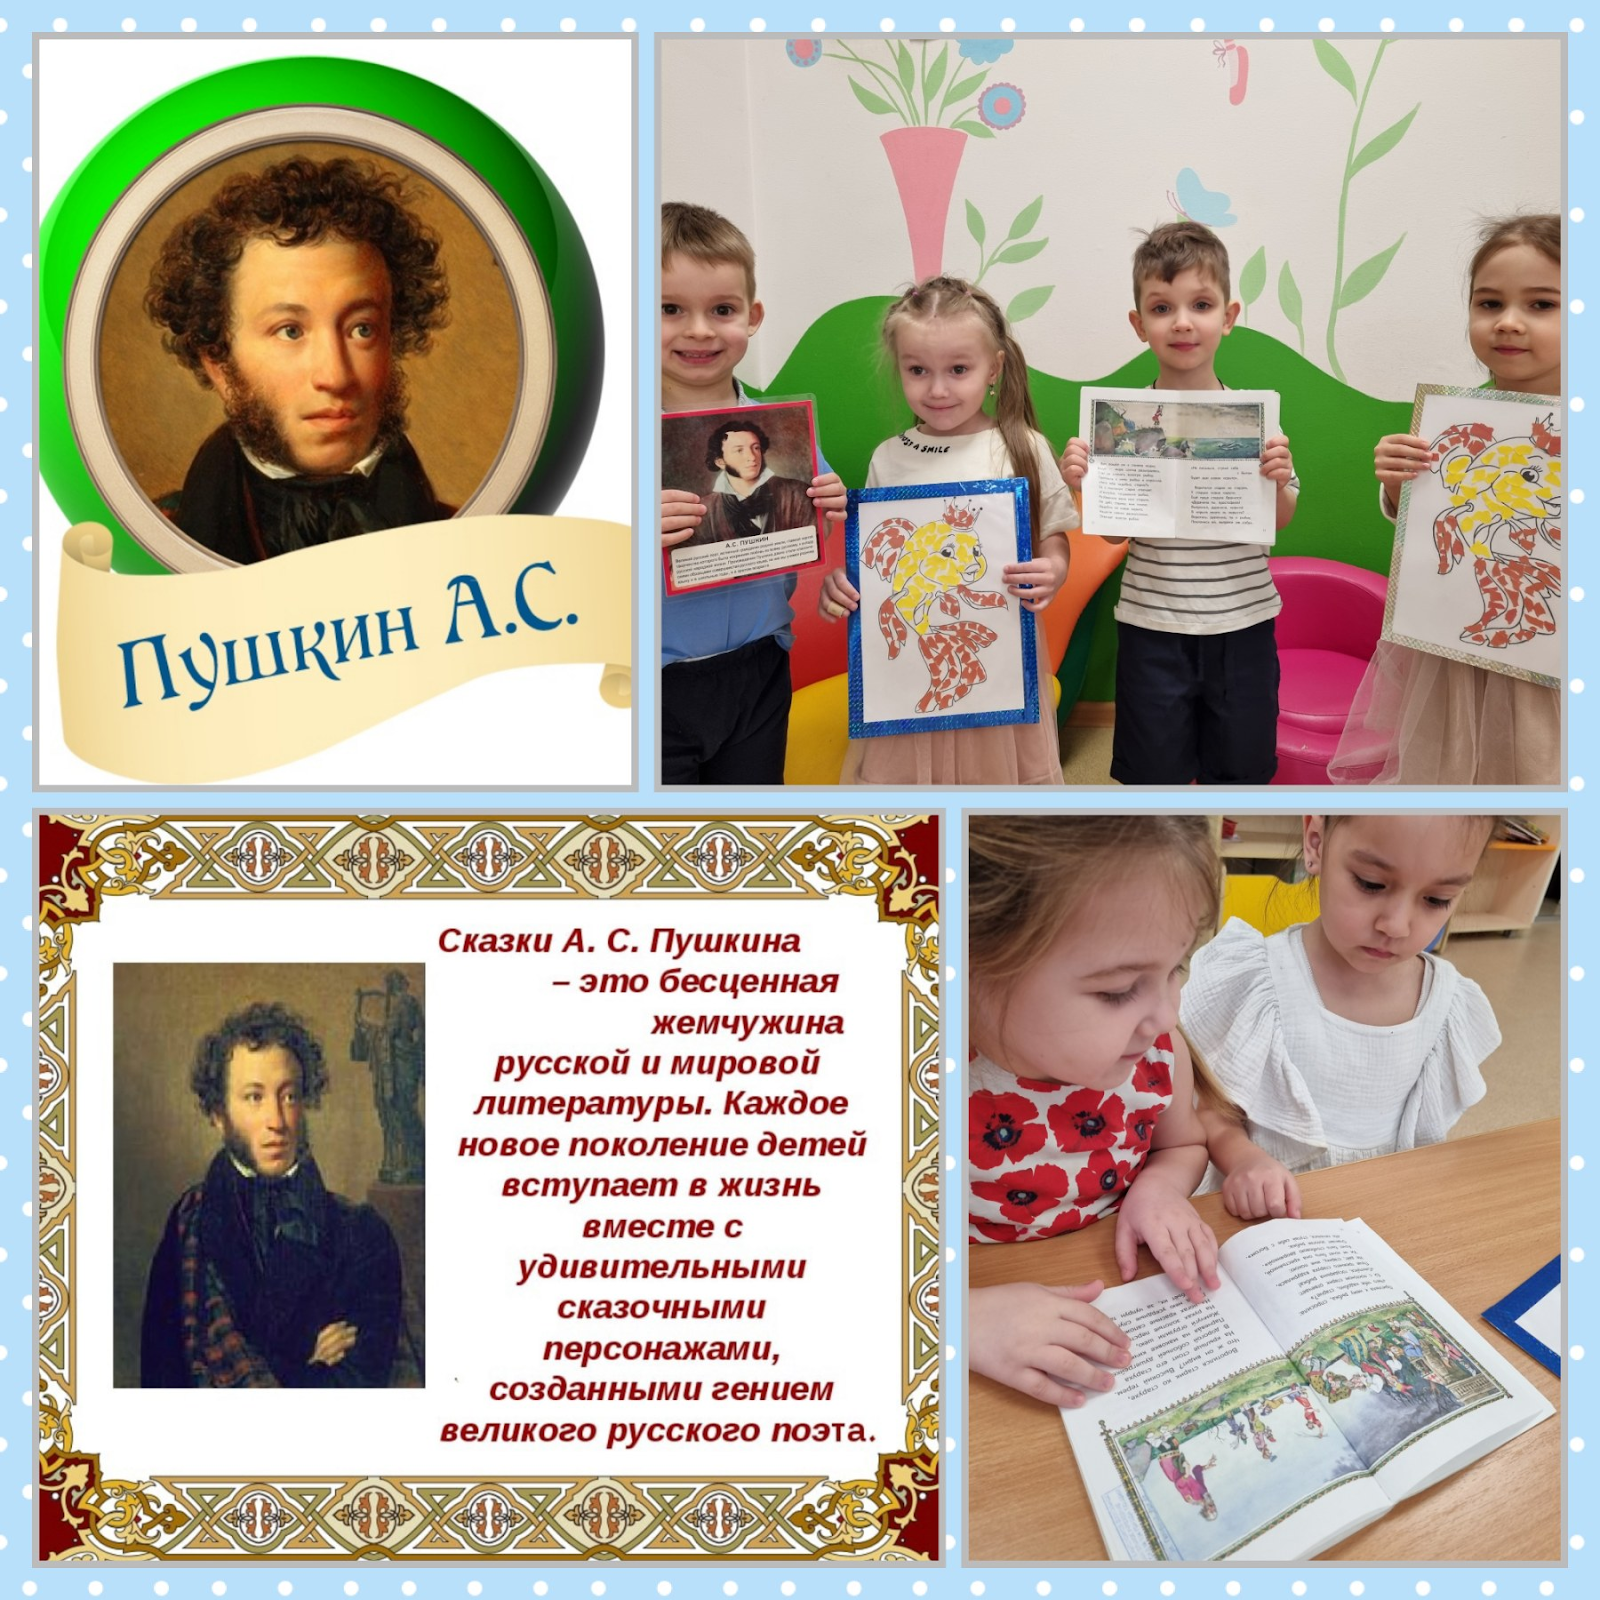 10 февраля — день памяти Александра Сергеевича Пушкина.